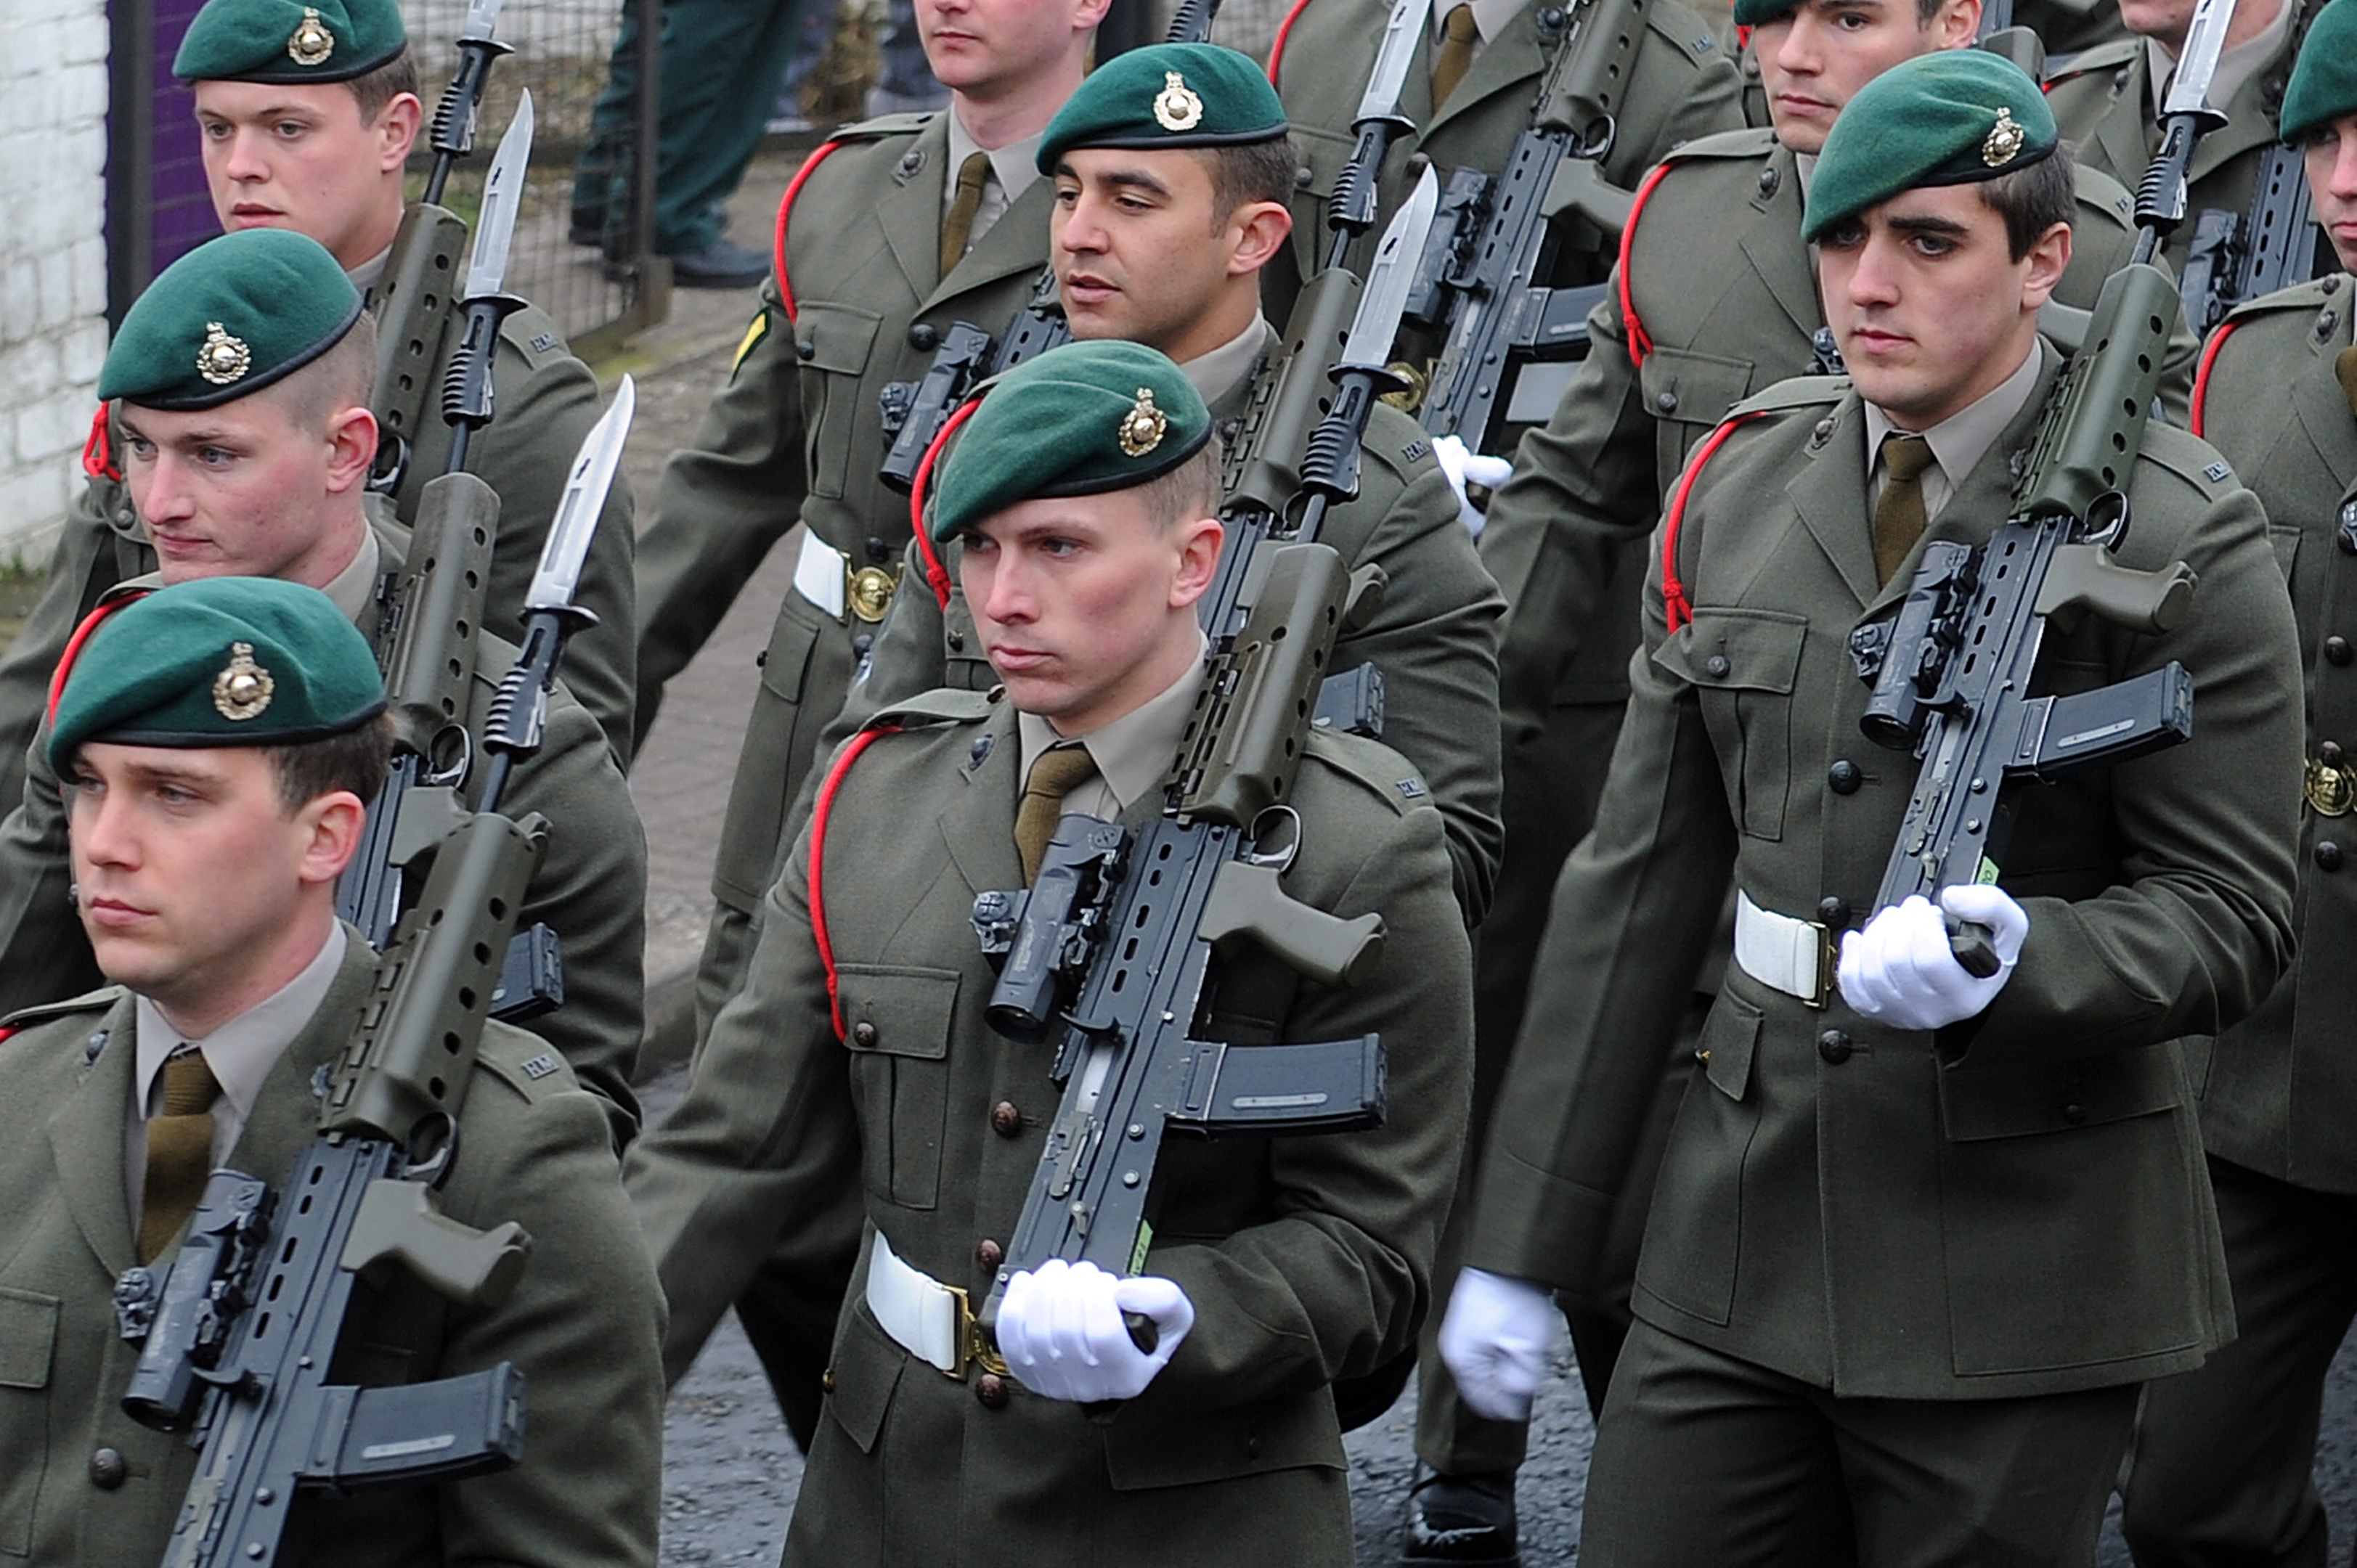 45 Commando marines parading in Arbroath in 2017